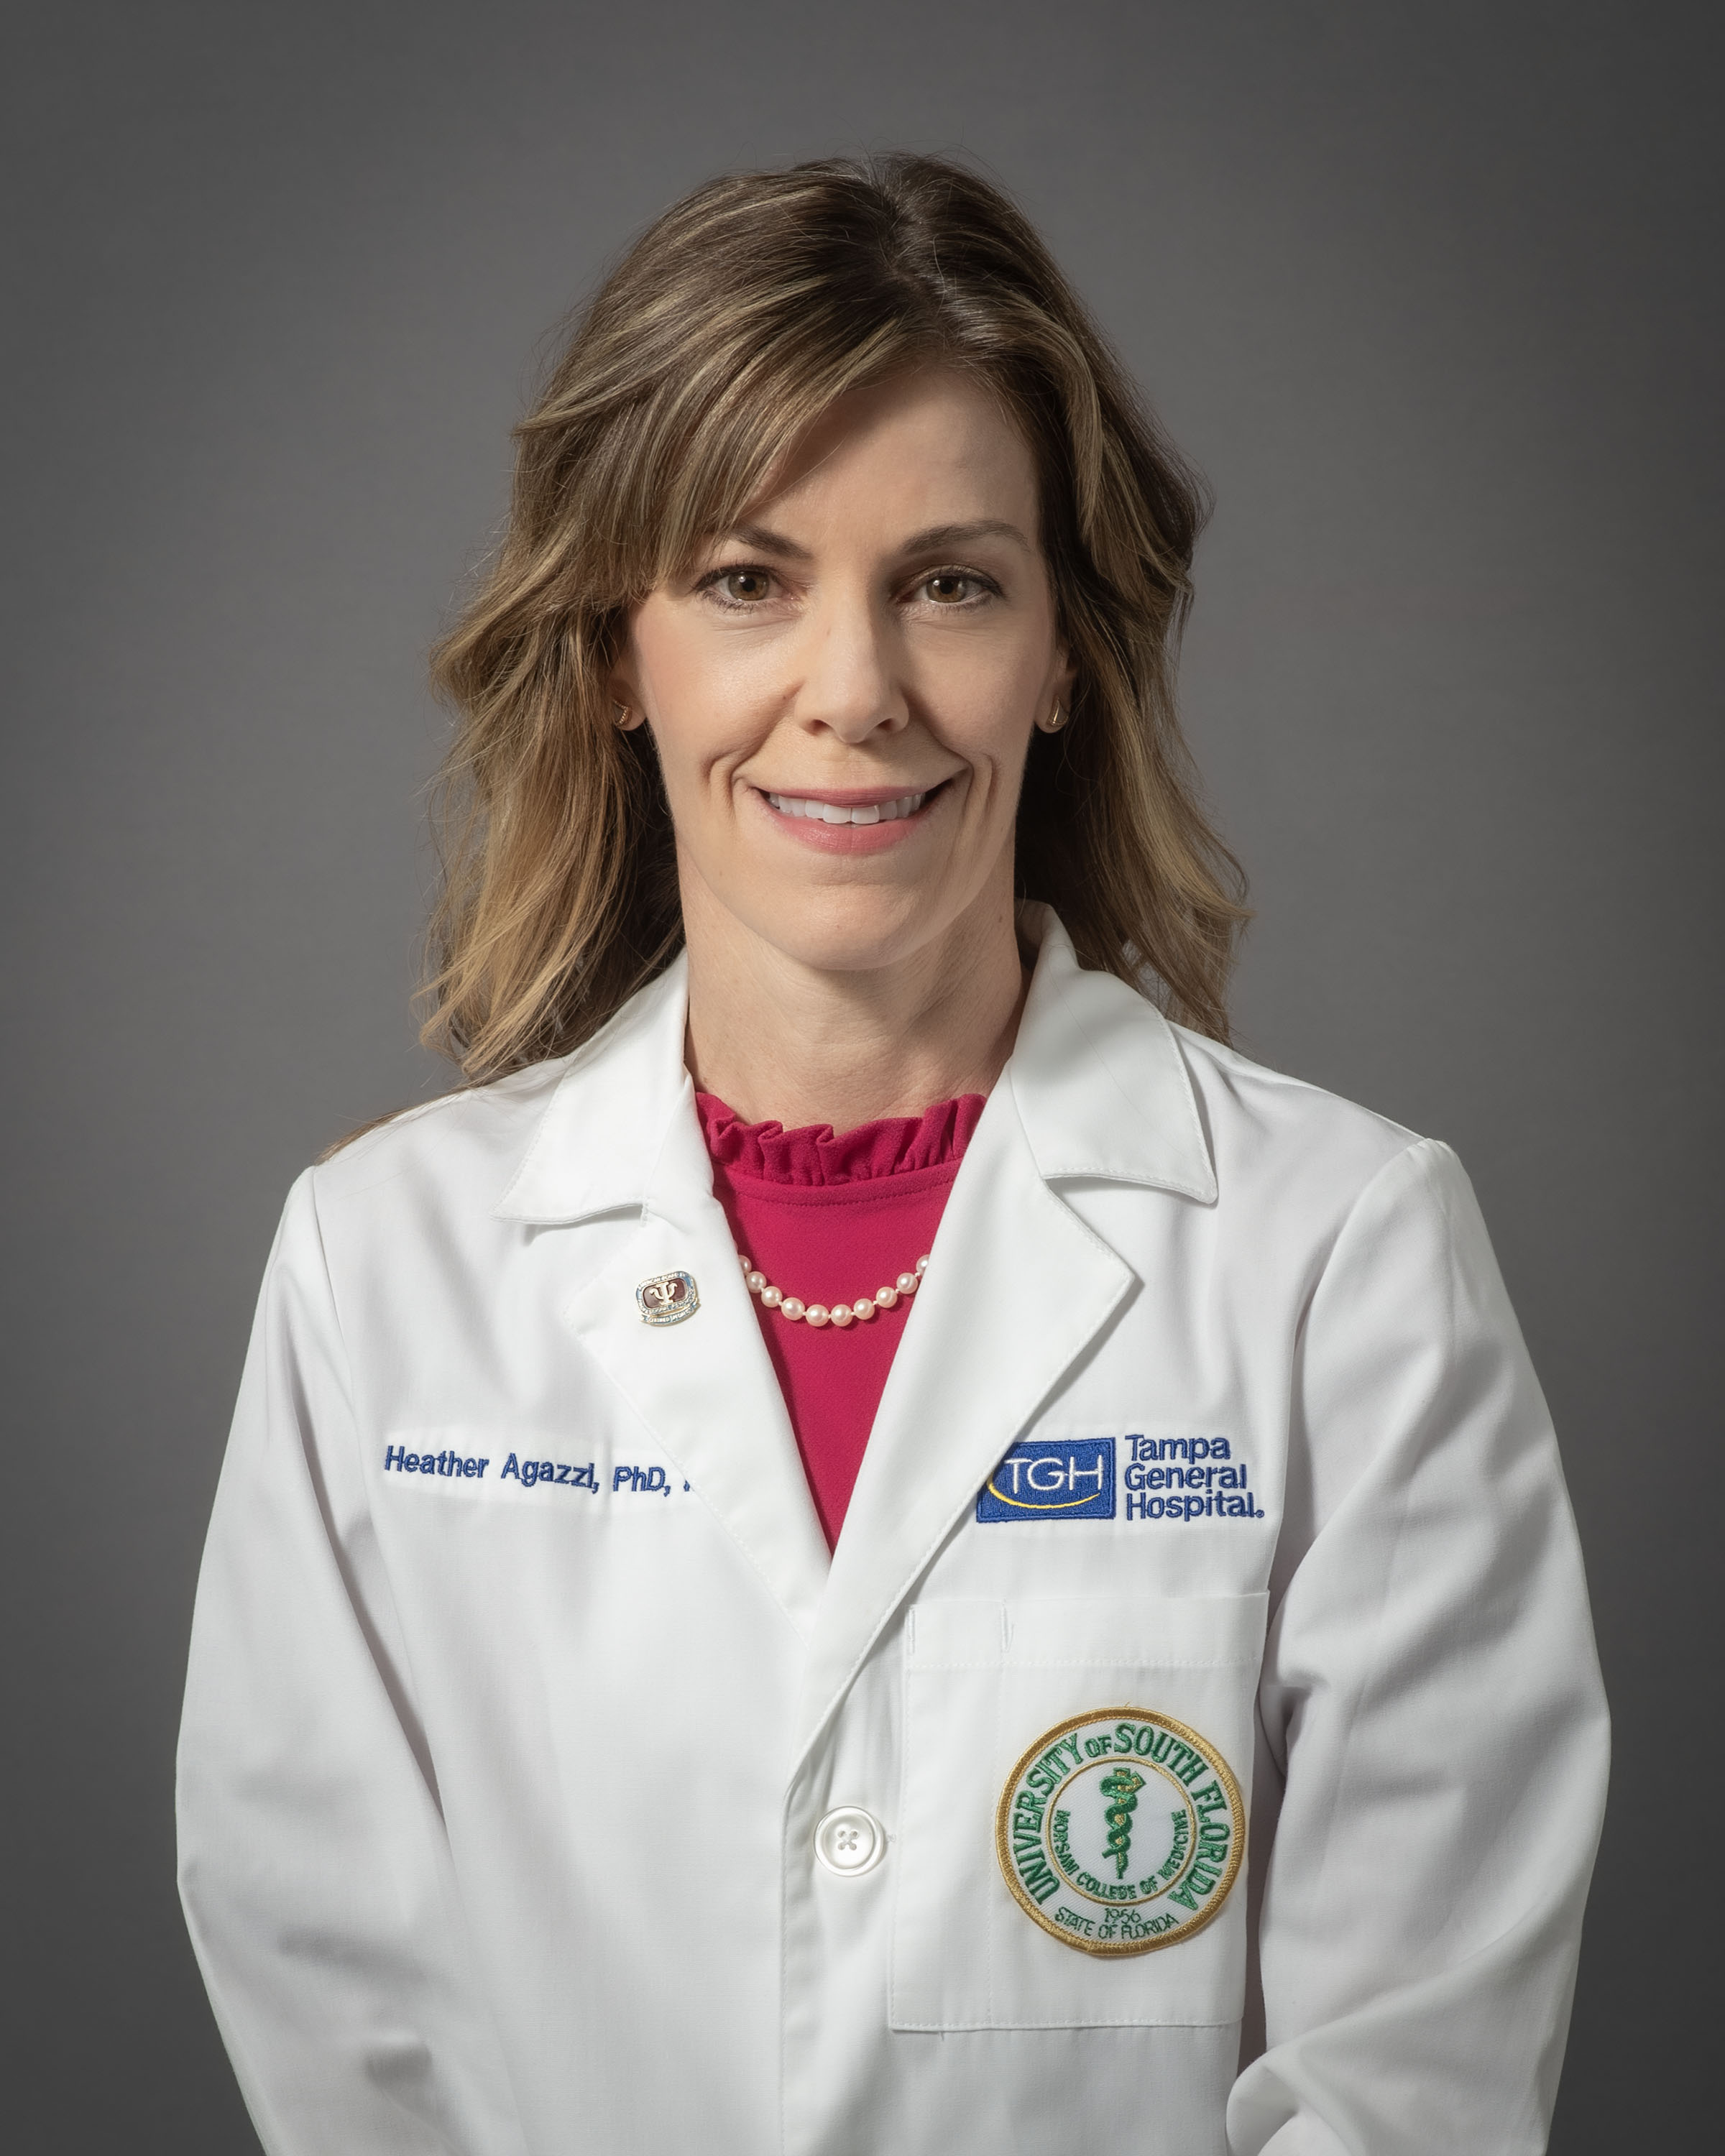 Profile Picture of Heather Agazzi, Ph.D., M.S., ABPP